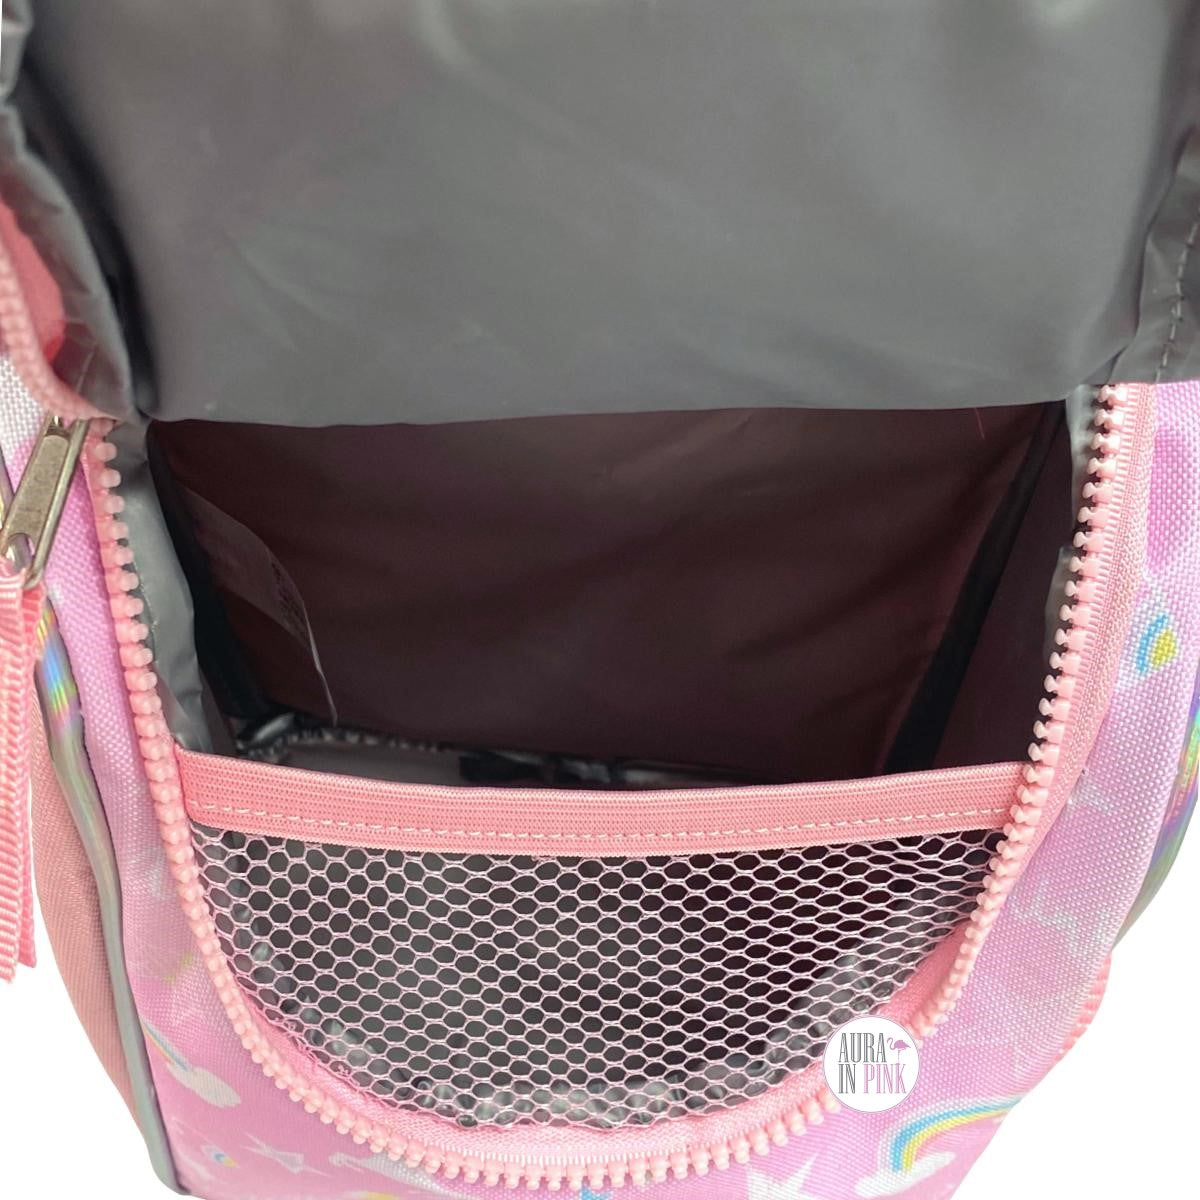 Ice Cream & Shine Pink Unicorn Insulated Lunch Tote Bag – Aura In